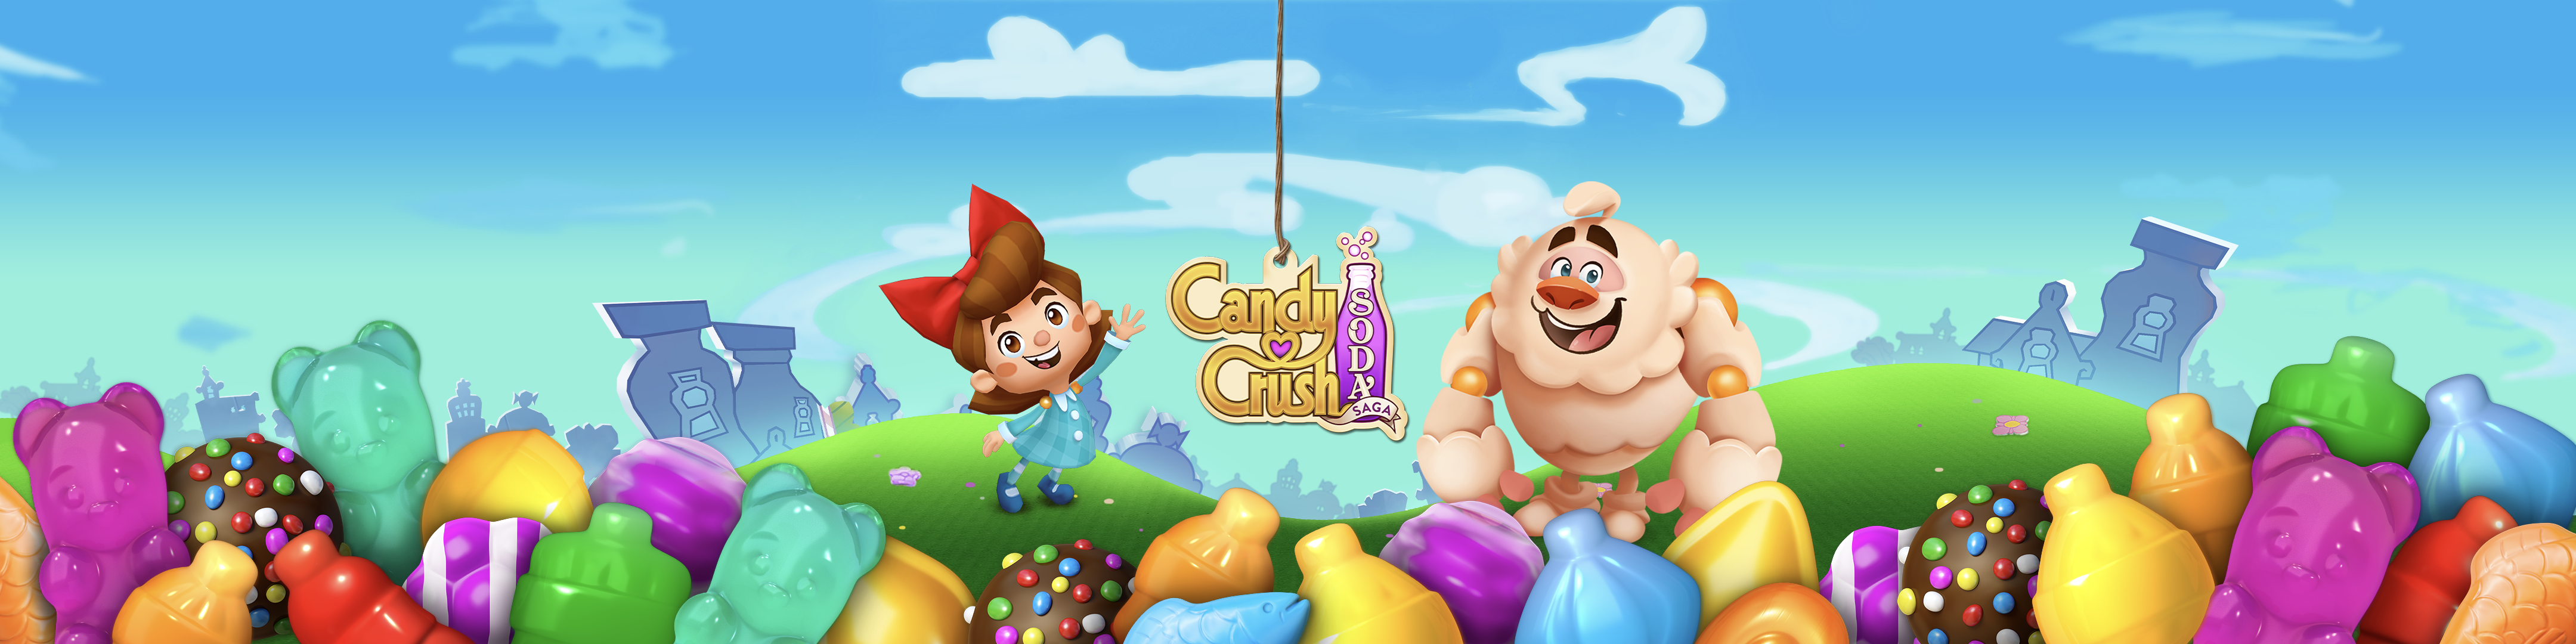 Candy crush 3293